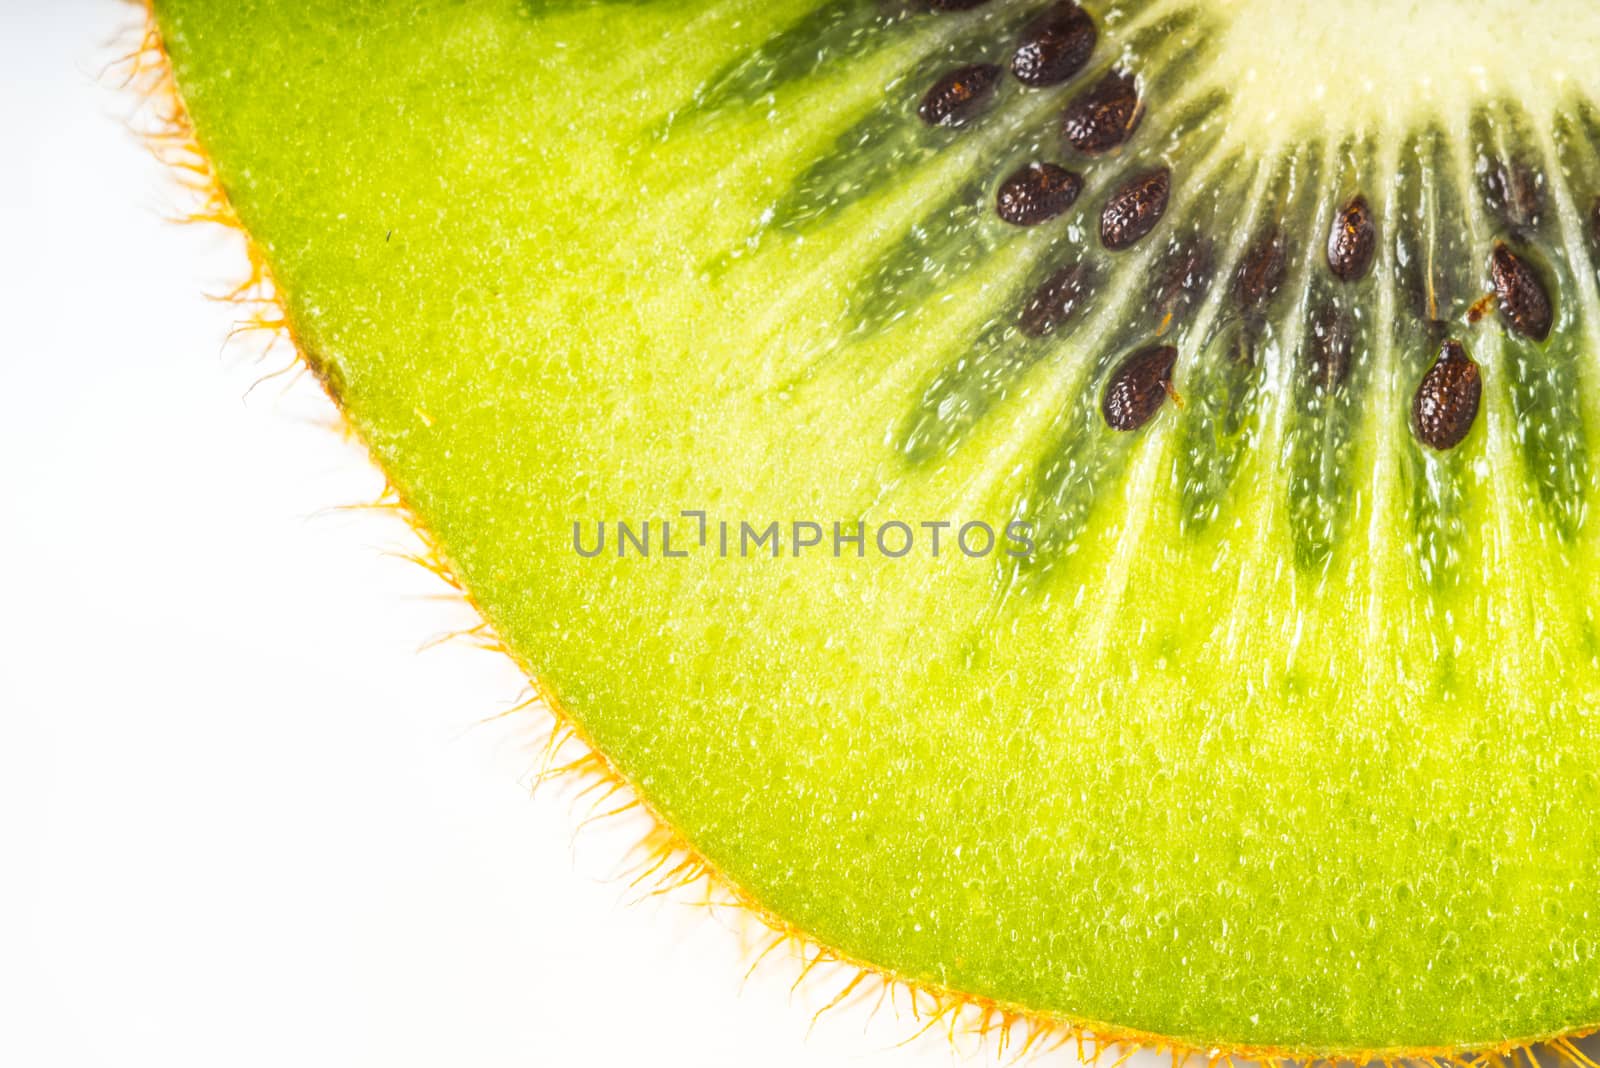 Slice of kiwi on the white background close-up by Deniskarpenkov